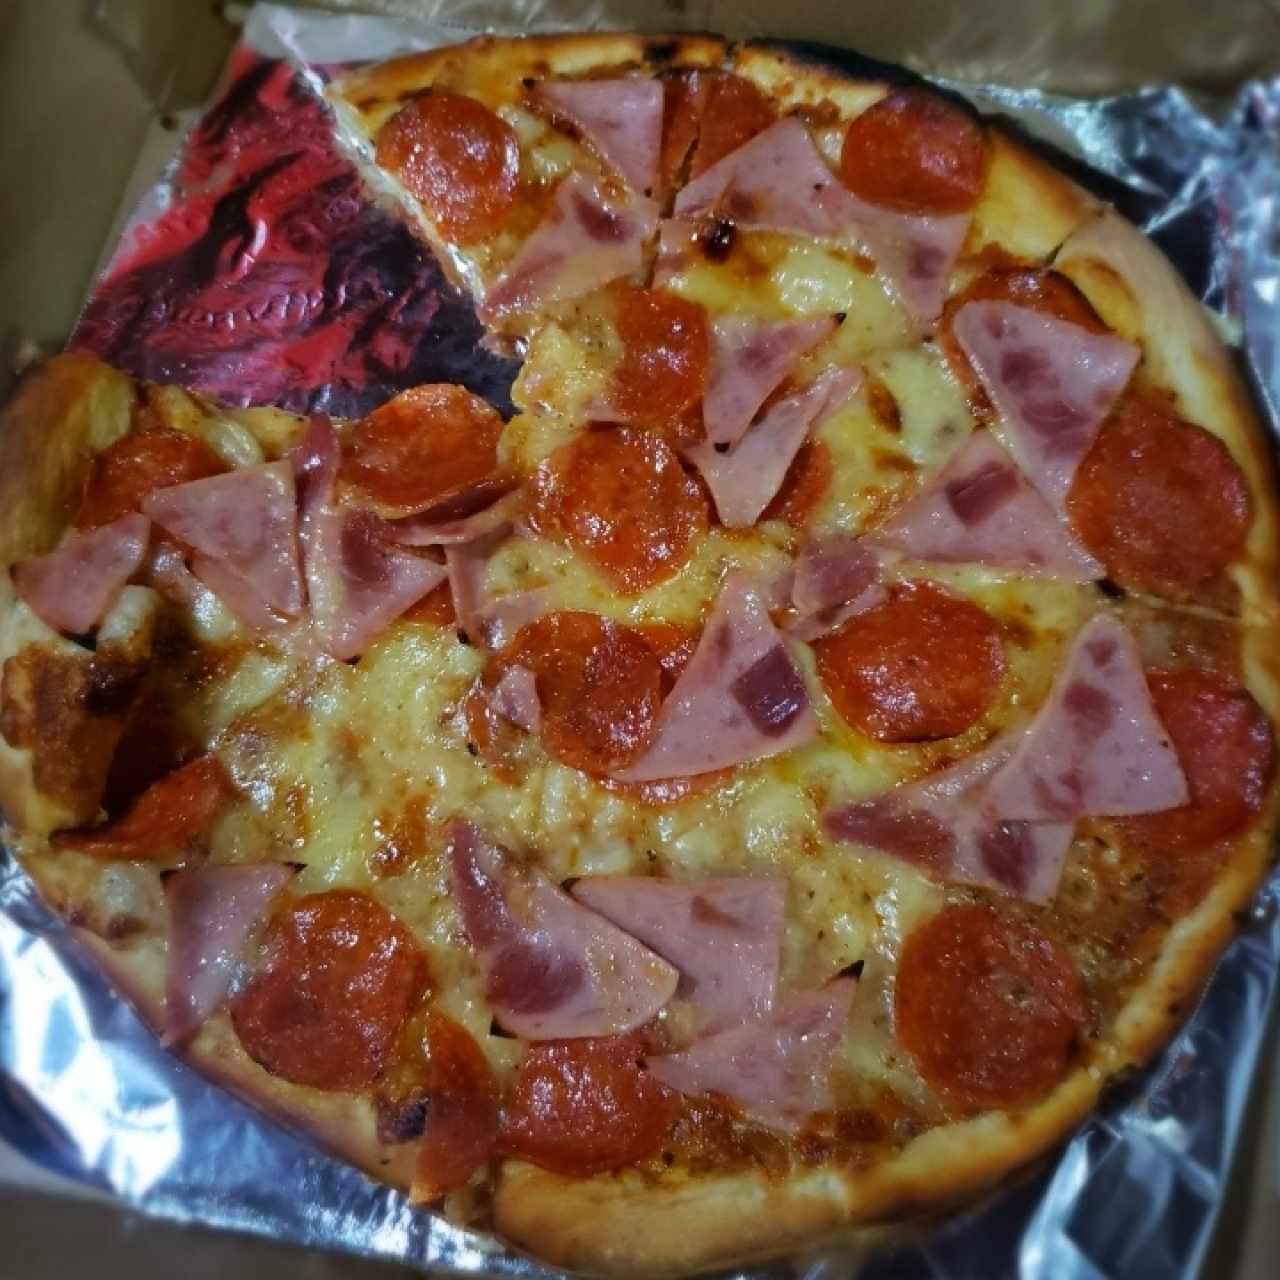 Pizza tamaño regular de pepperoni y jamón